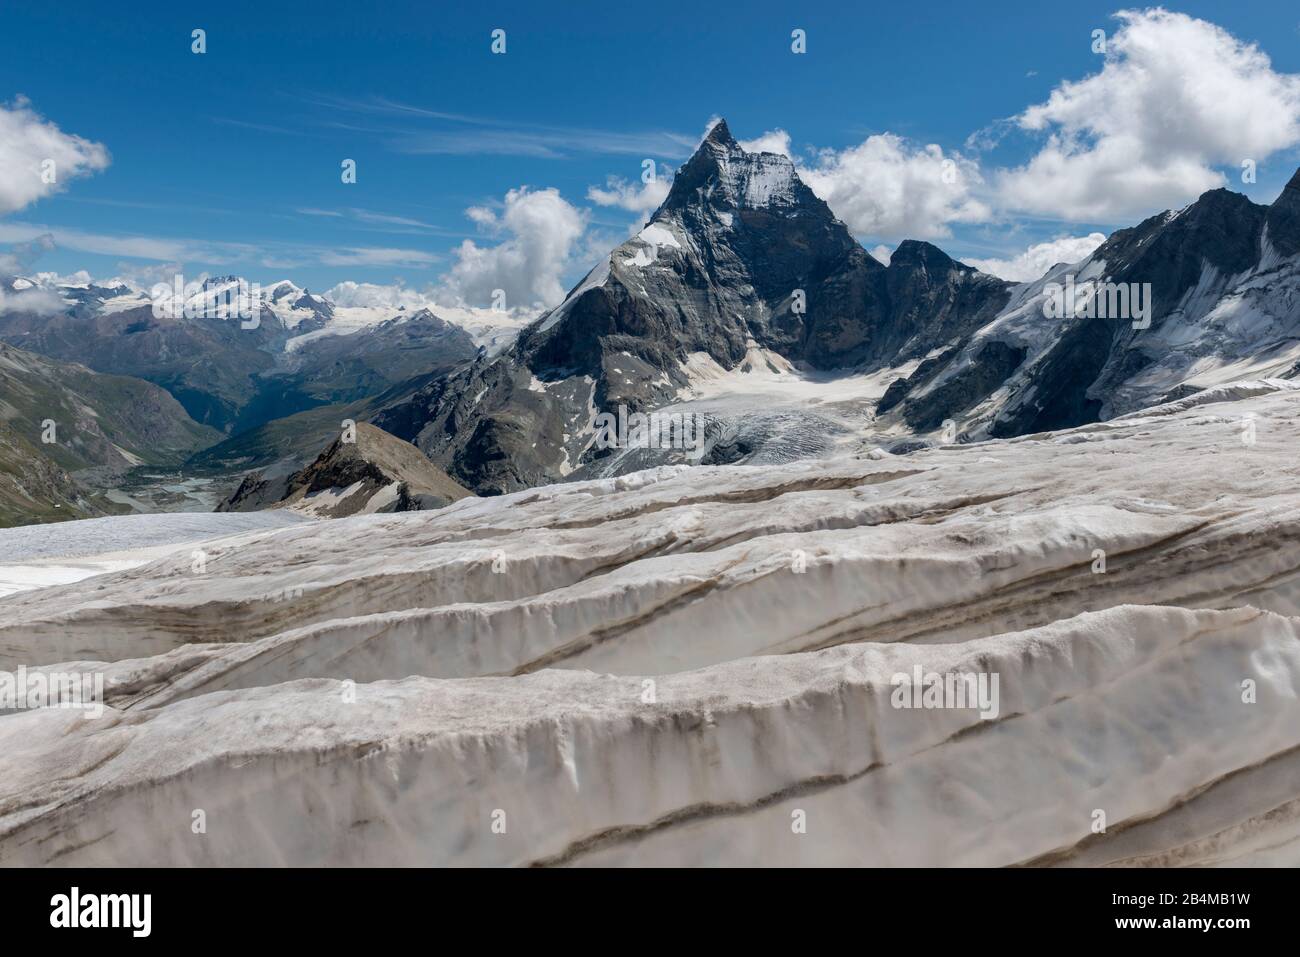 Svizzera, Vallese, Haute Route Chamonix Zermatt, crepacci sul ghiacciaio Stockji con Allalinhorn, Rimpfischhorn, Strahlhorn e Cervino - Zmuttgrat, West Face e Liongrat Foto Stock